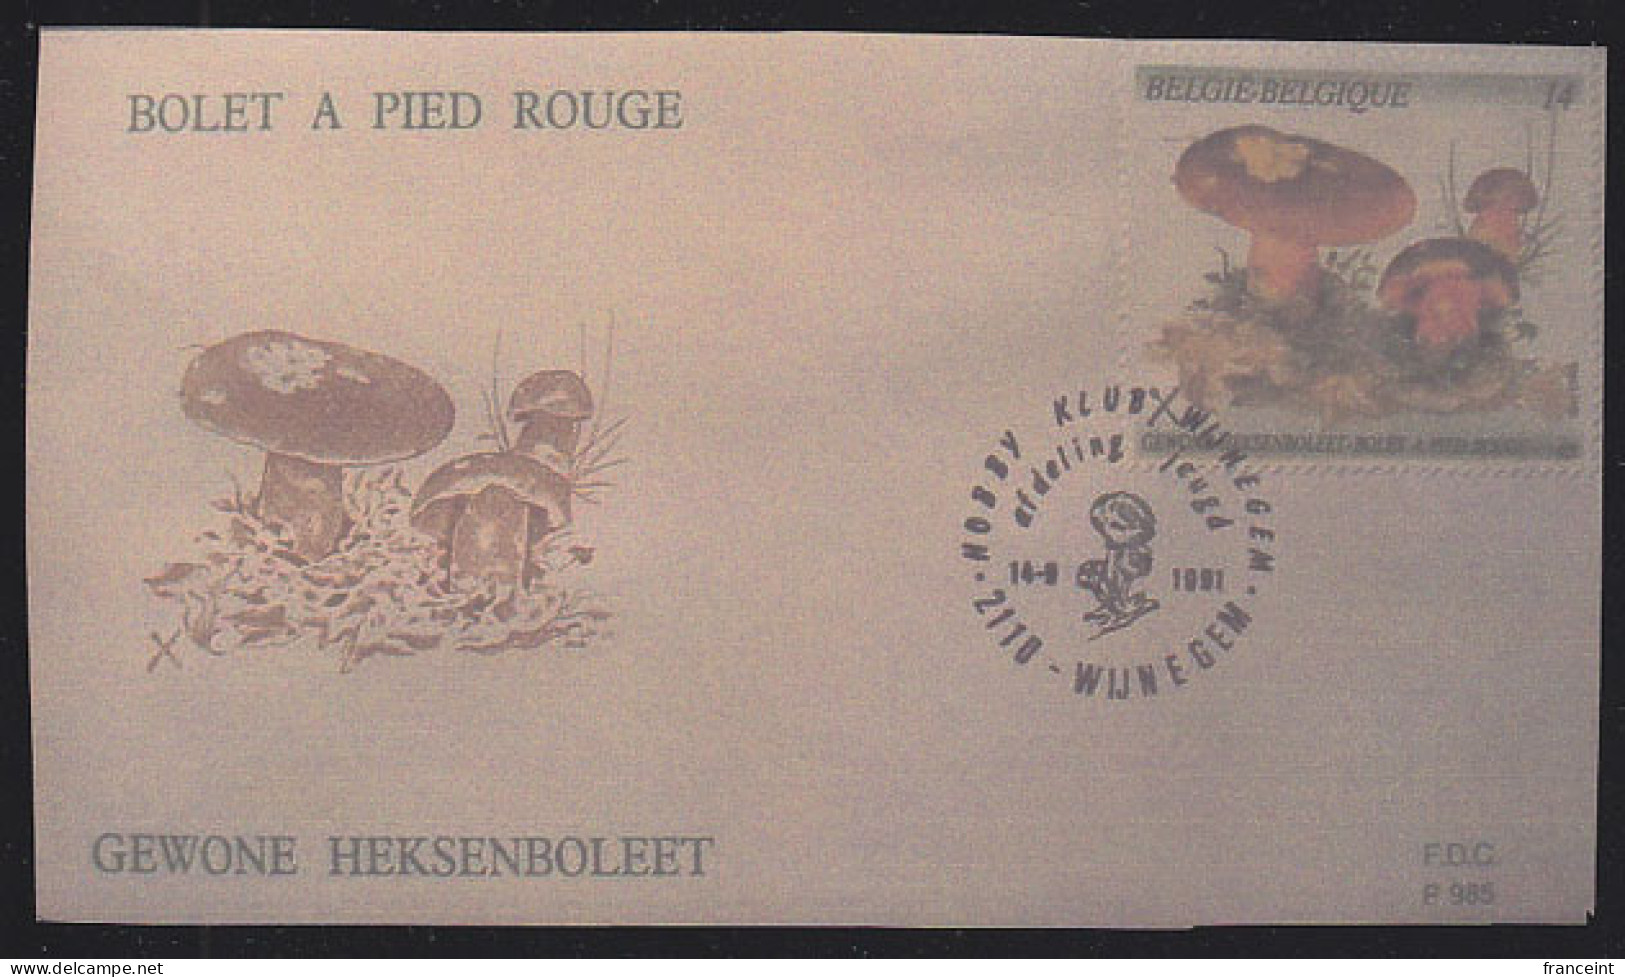 BELGIUM(1991) Boletus Erythropus. Die Proof In Green Signed By The Engraver, Representing The FDC Cachet. Scott No 1413. - Probe- Und Nachdrucke